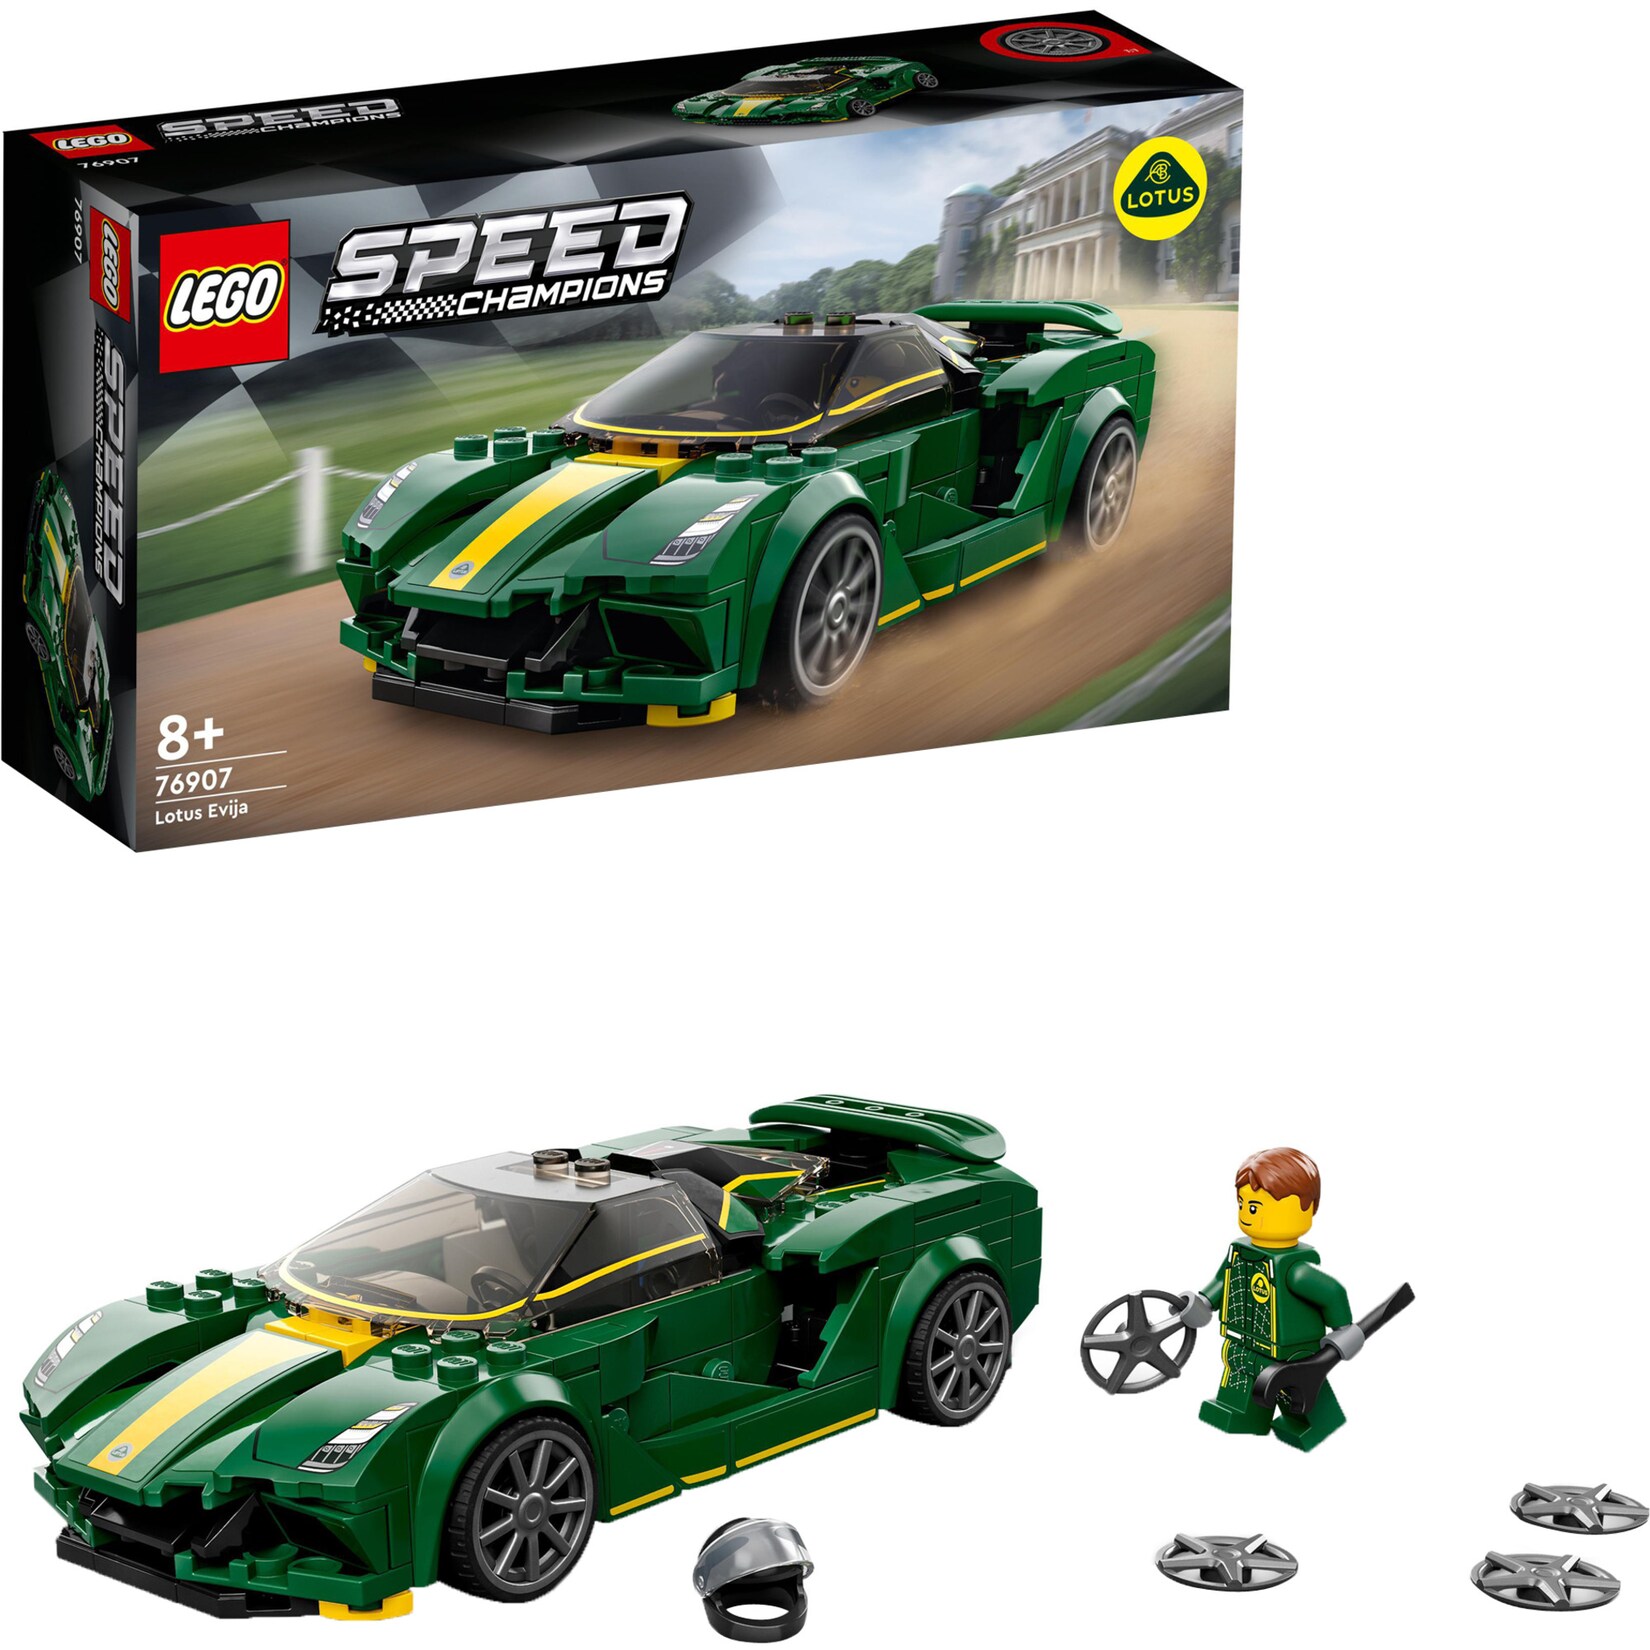 LEGO Konstruktionsspielzeug Speed Champions Lotus Evija